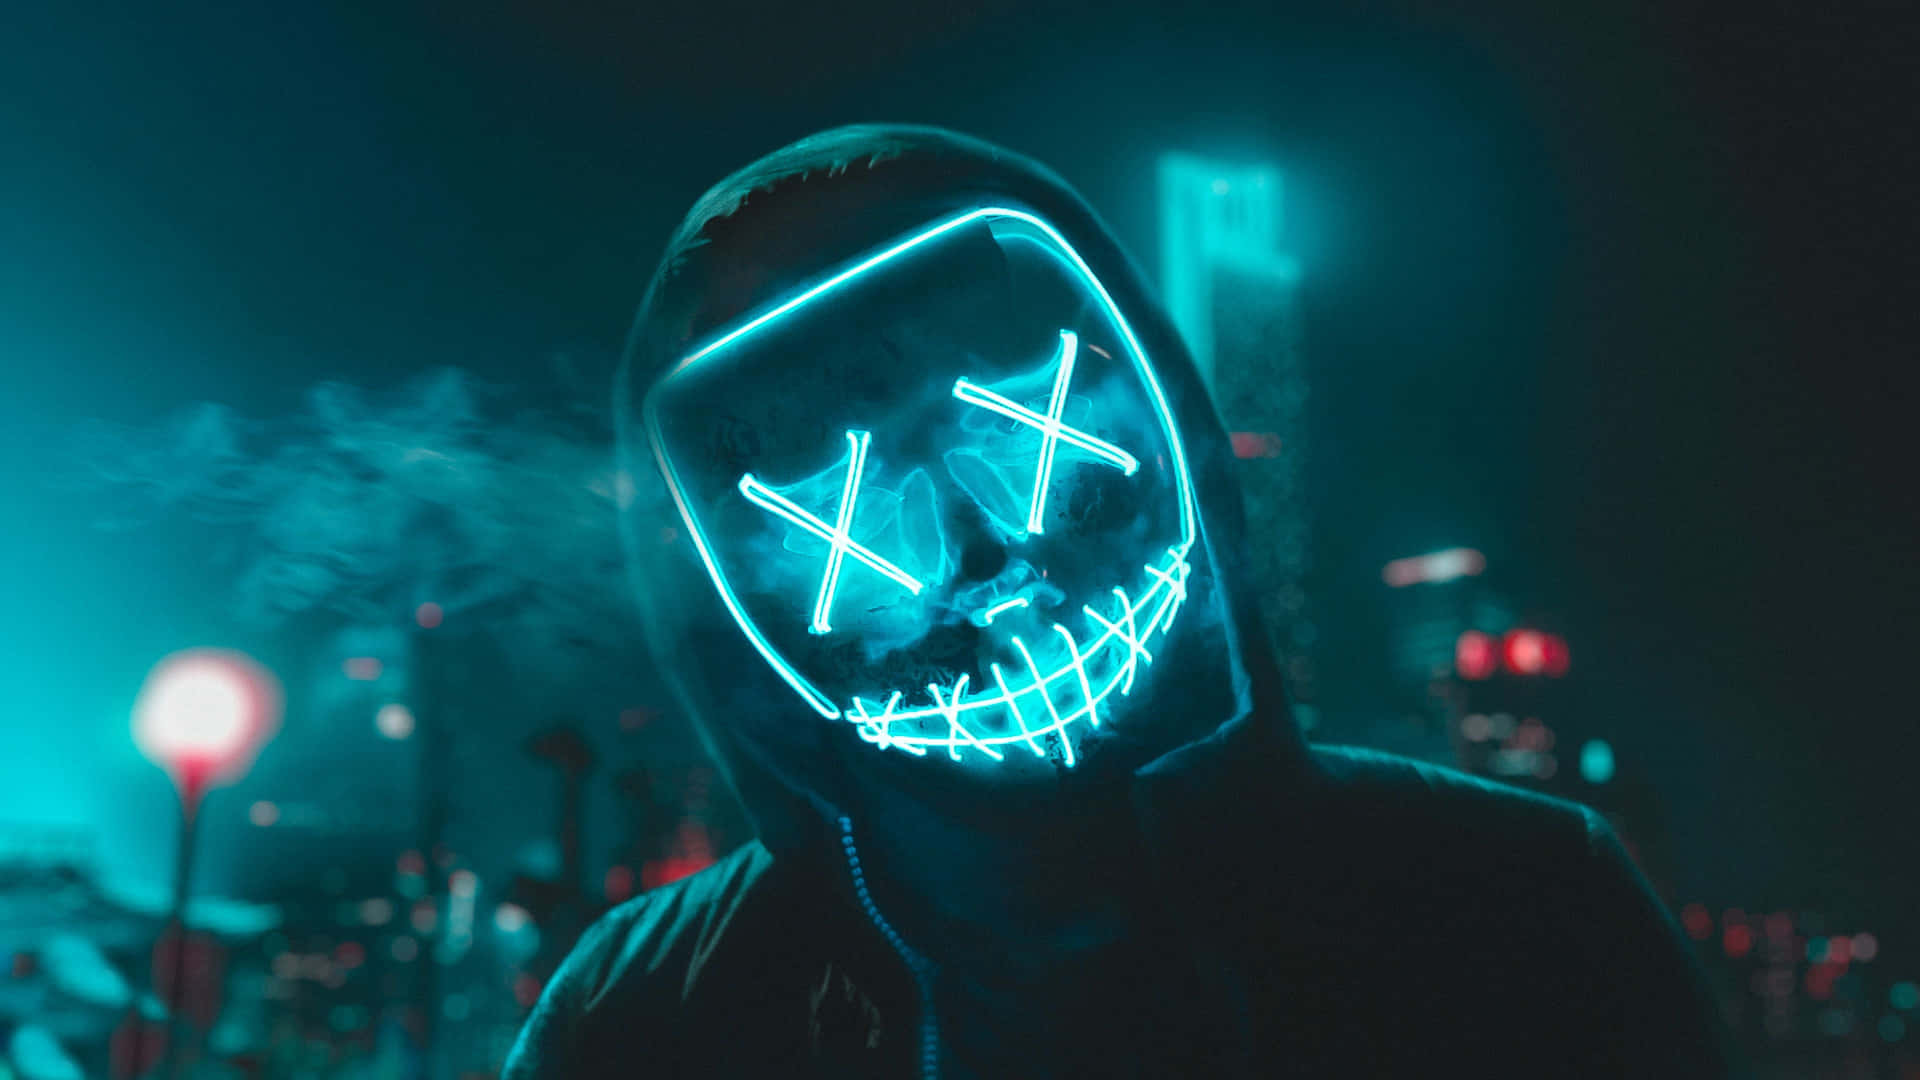 Caption: Radiant Neon Mask in the Dark Wallpaper